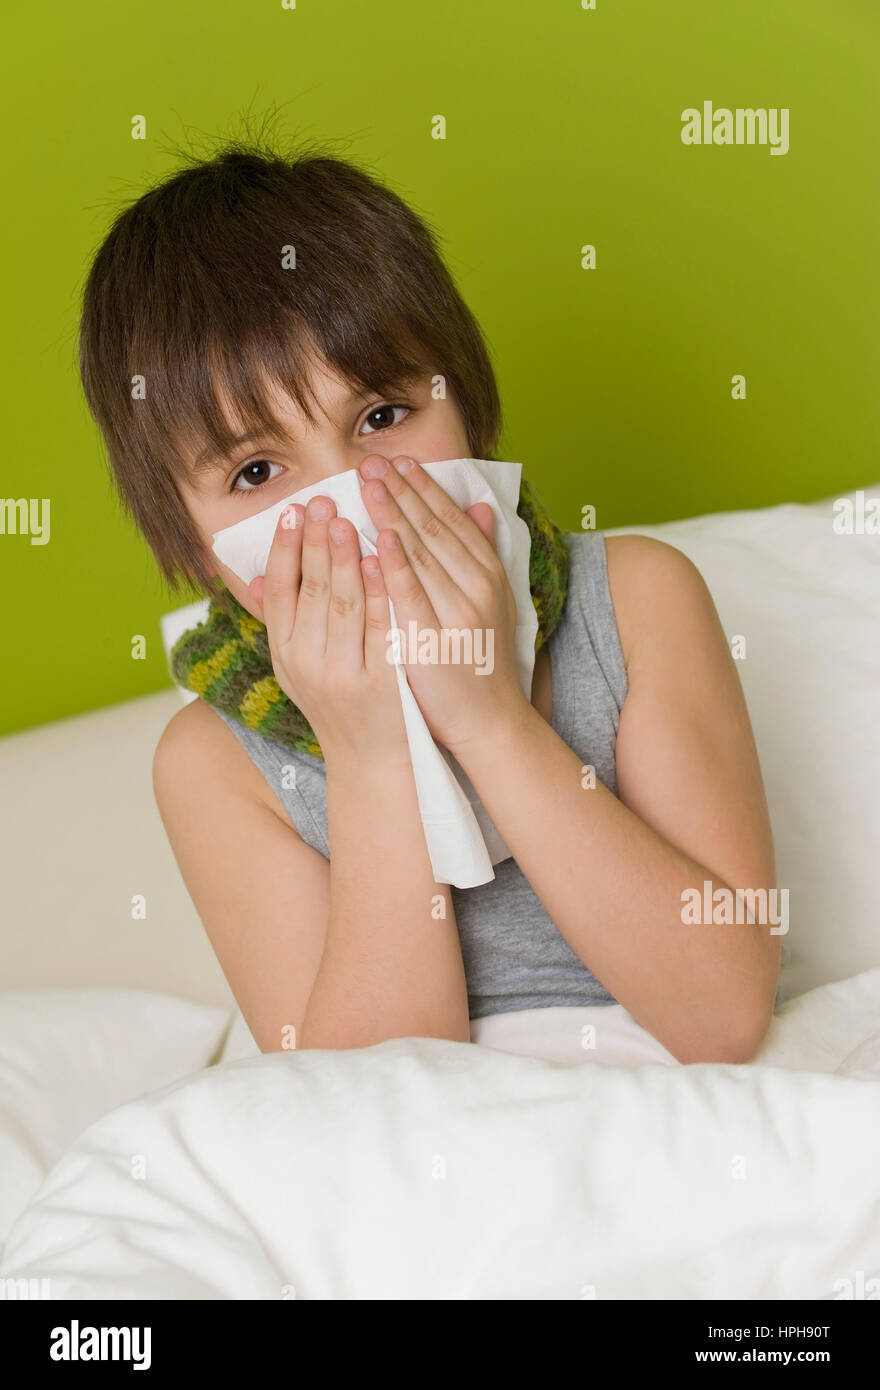 Kranker Junge schneuzt sich im Bett - sick boy in bed blows his nose, Model released Stock Photo